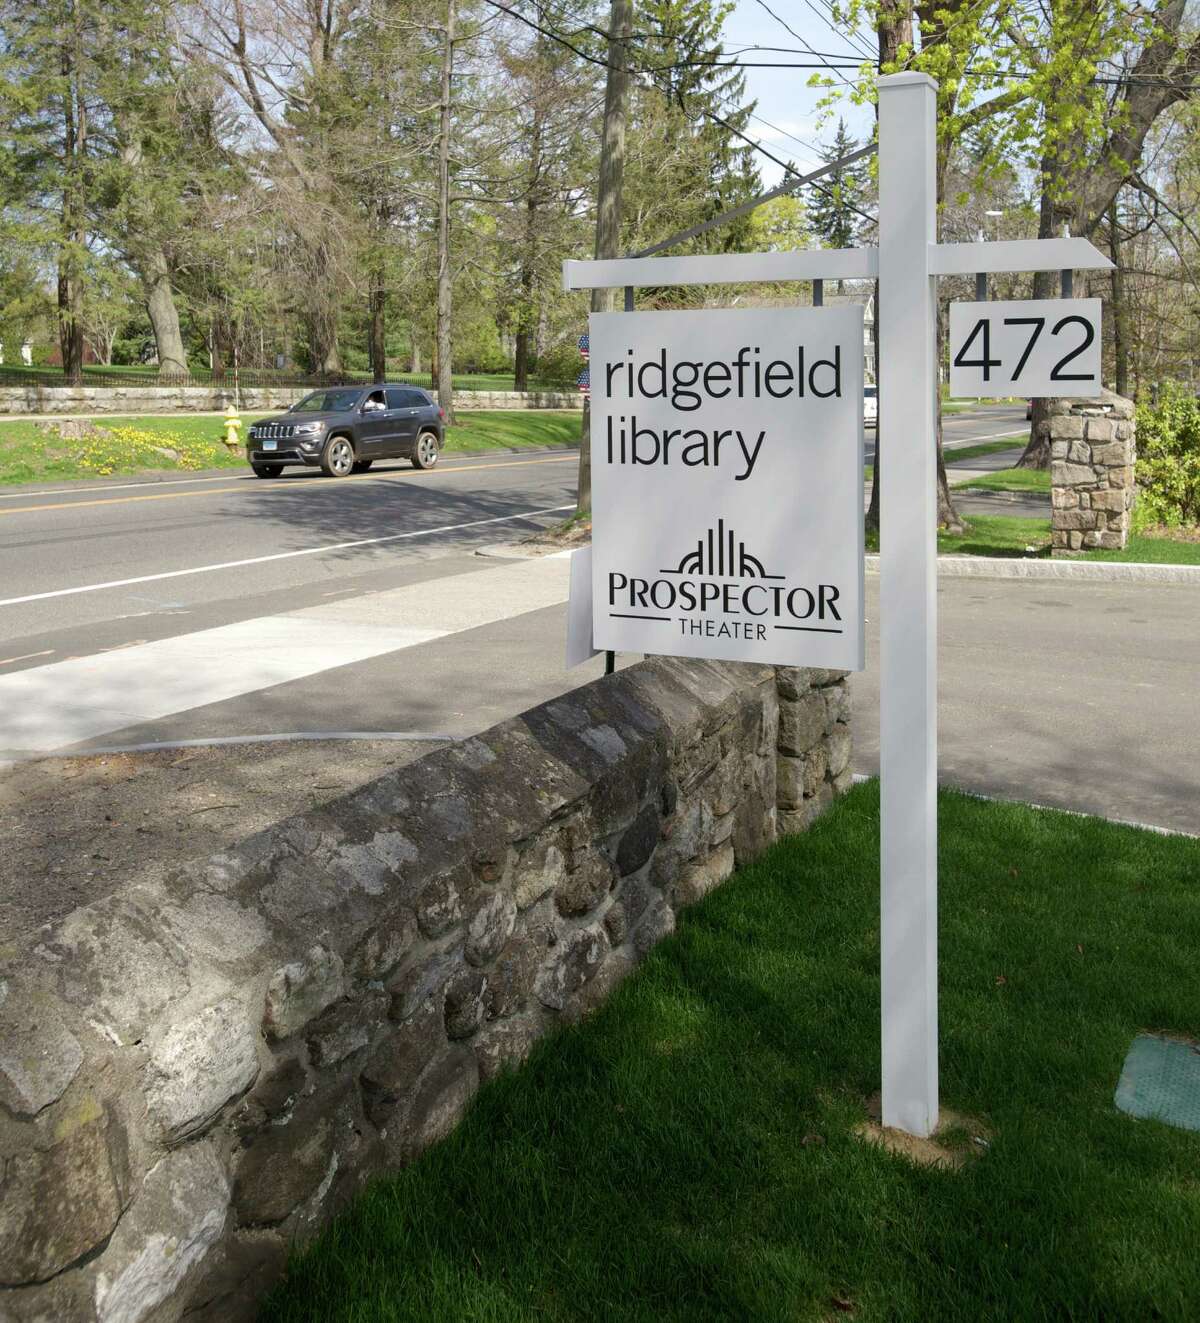 The Ridgefield Library